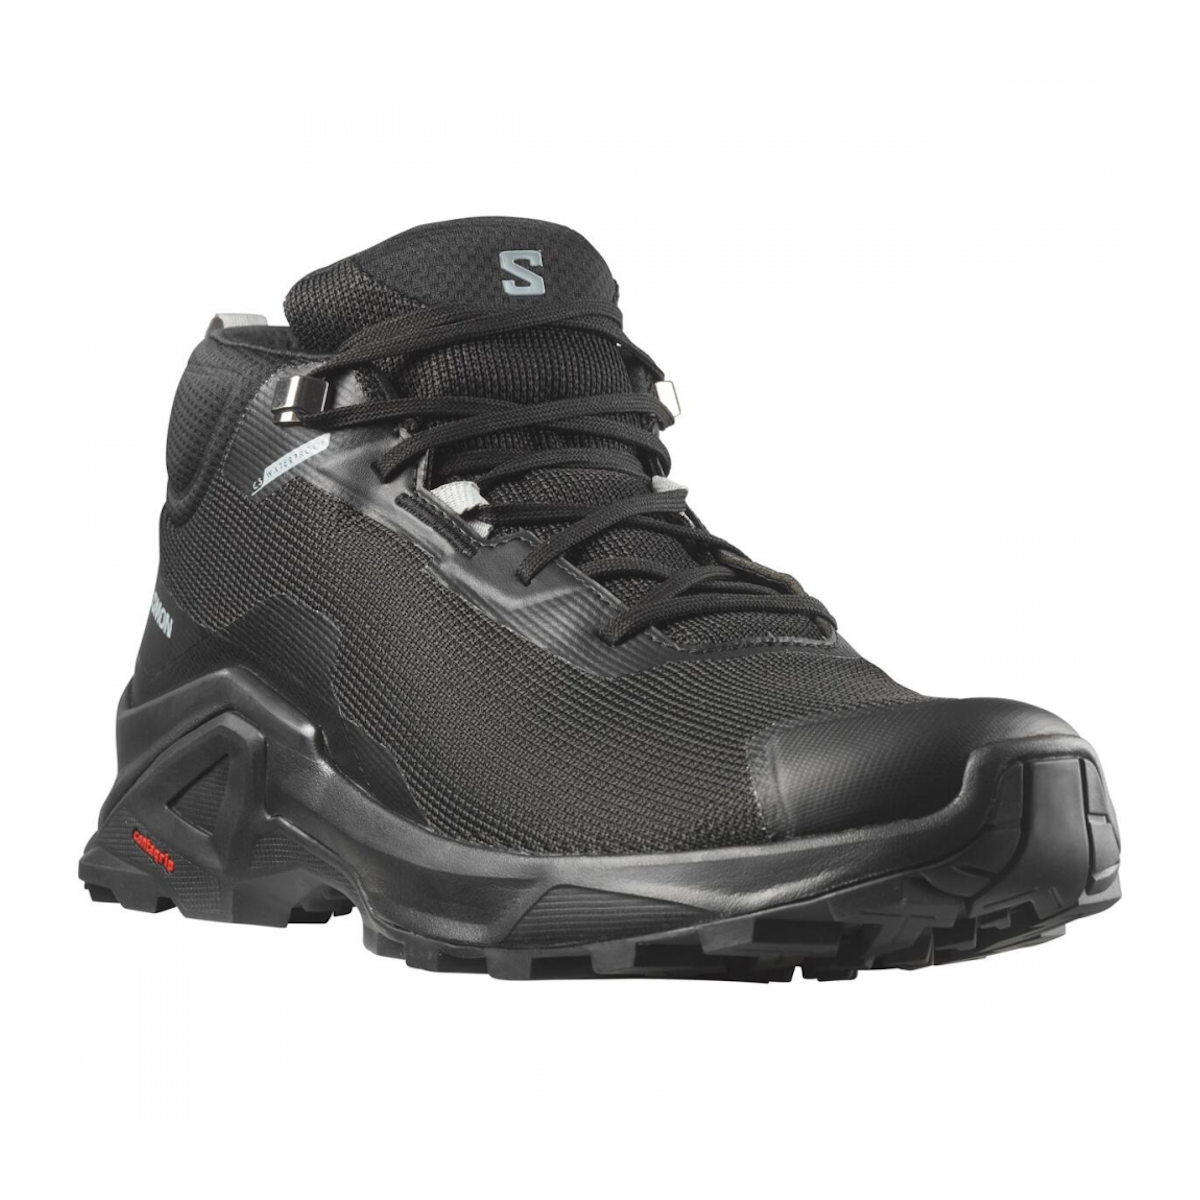 SALOMON X REVEAL CHUKKA CSWP 2 hiking footwear - black